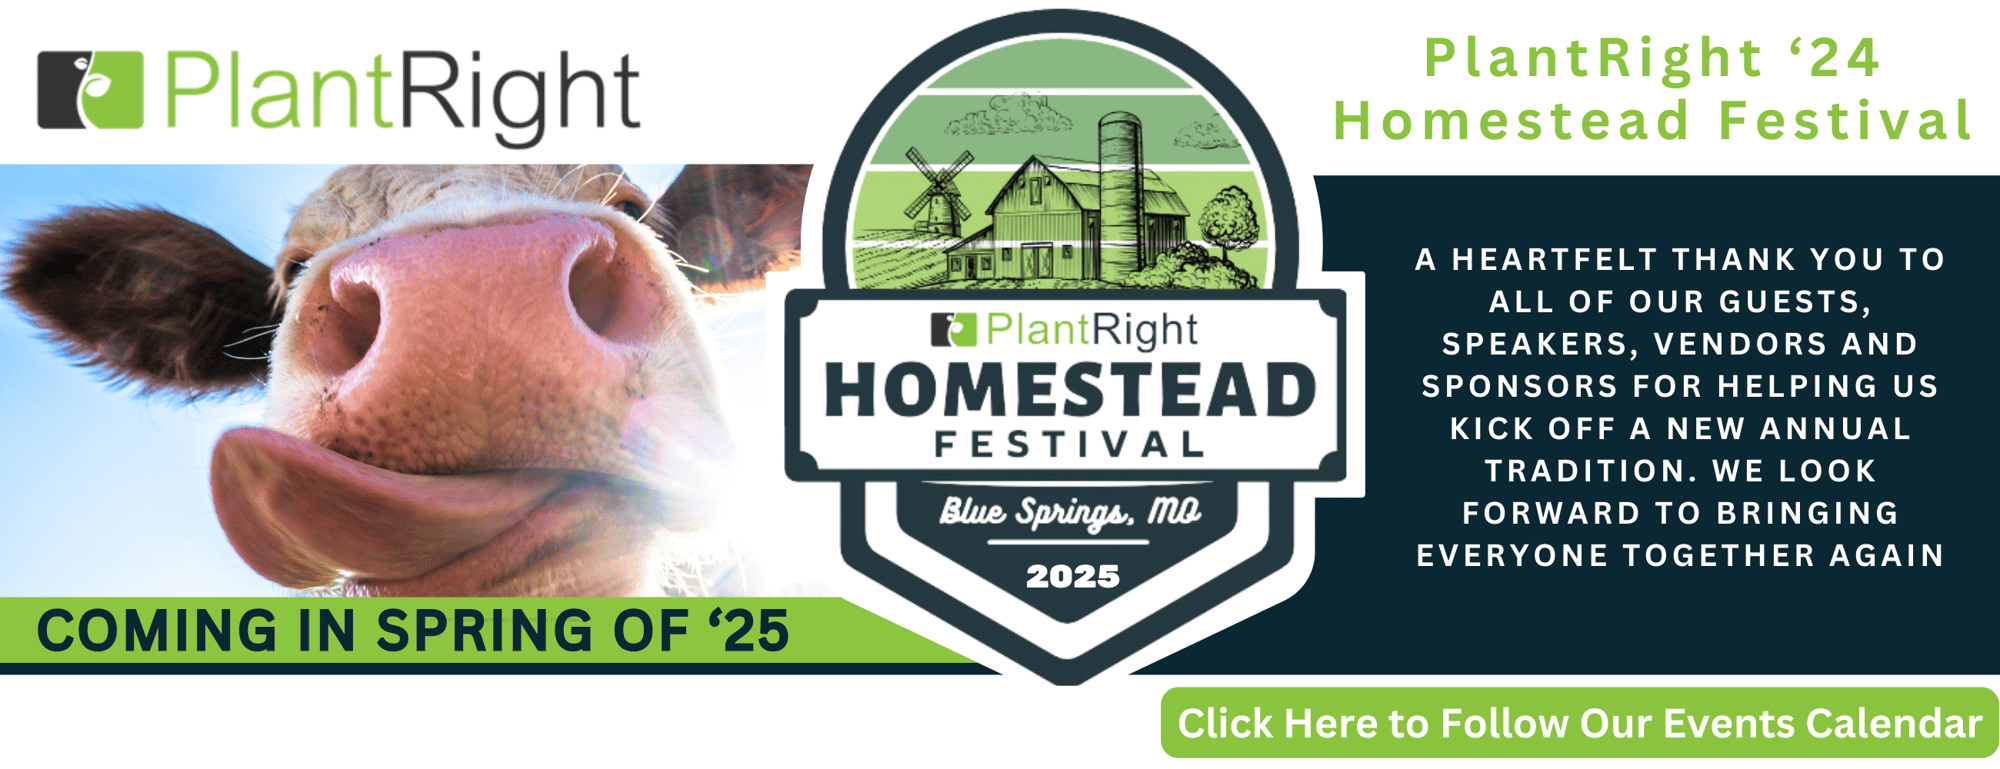 Homestead Fest Webpage Images (2600 x 1000 px) (4)-1